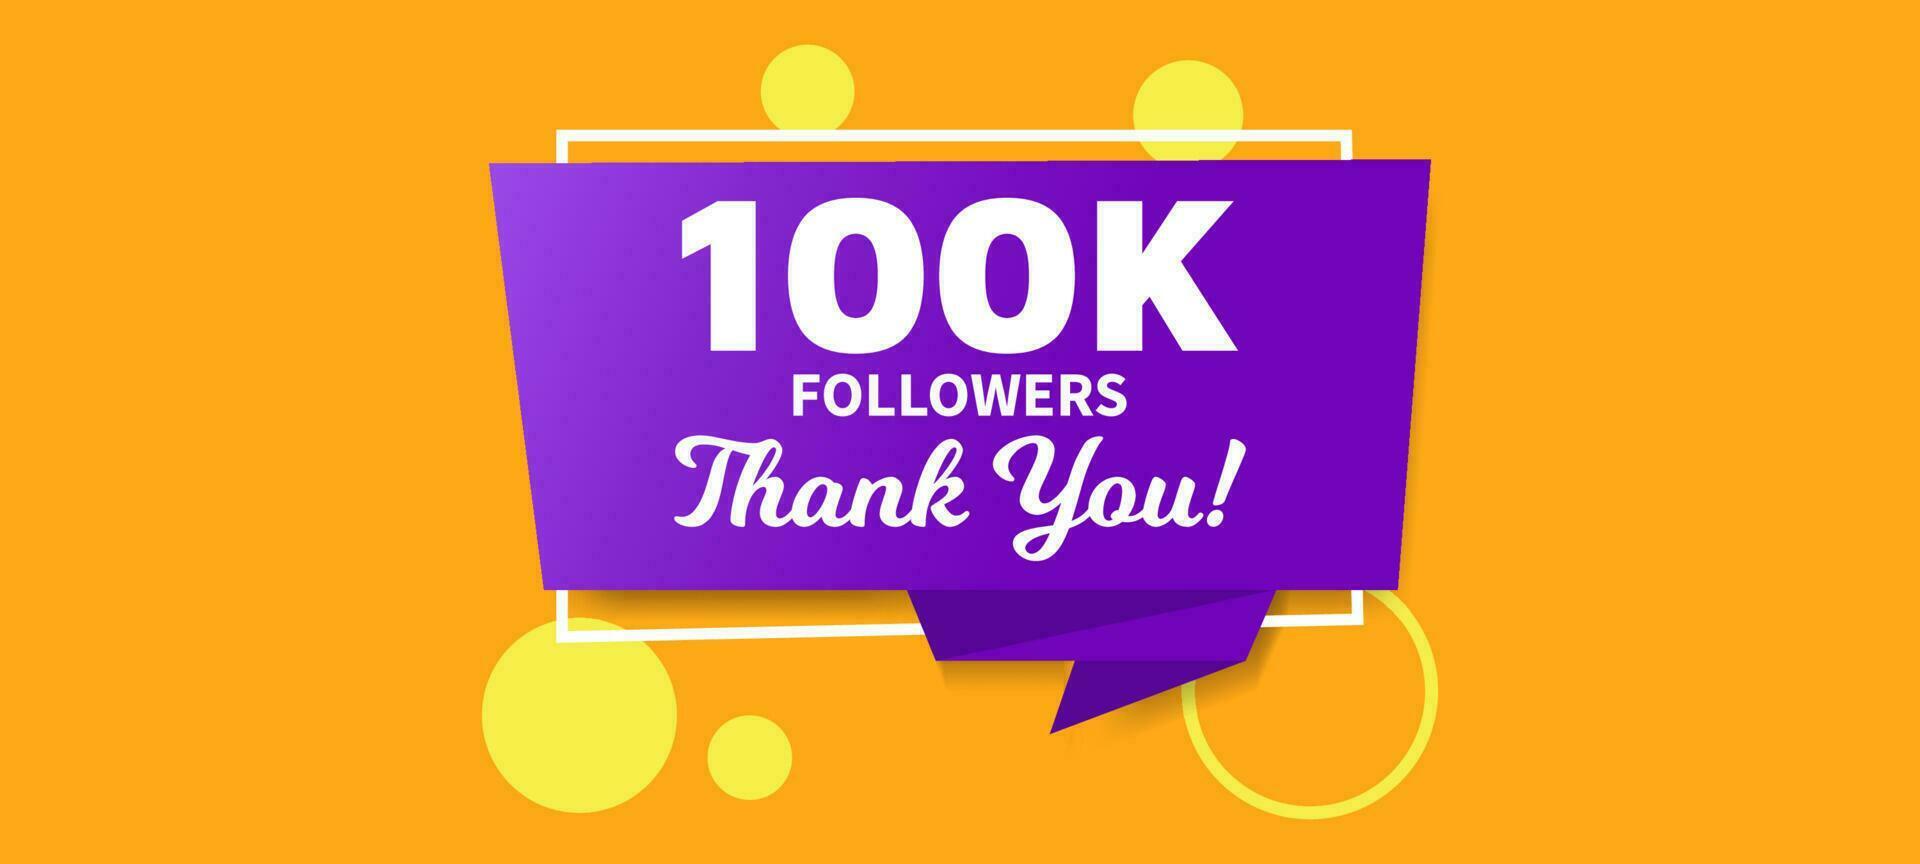 100k followers thank you social media post vector